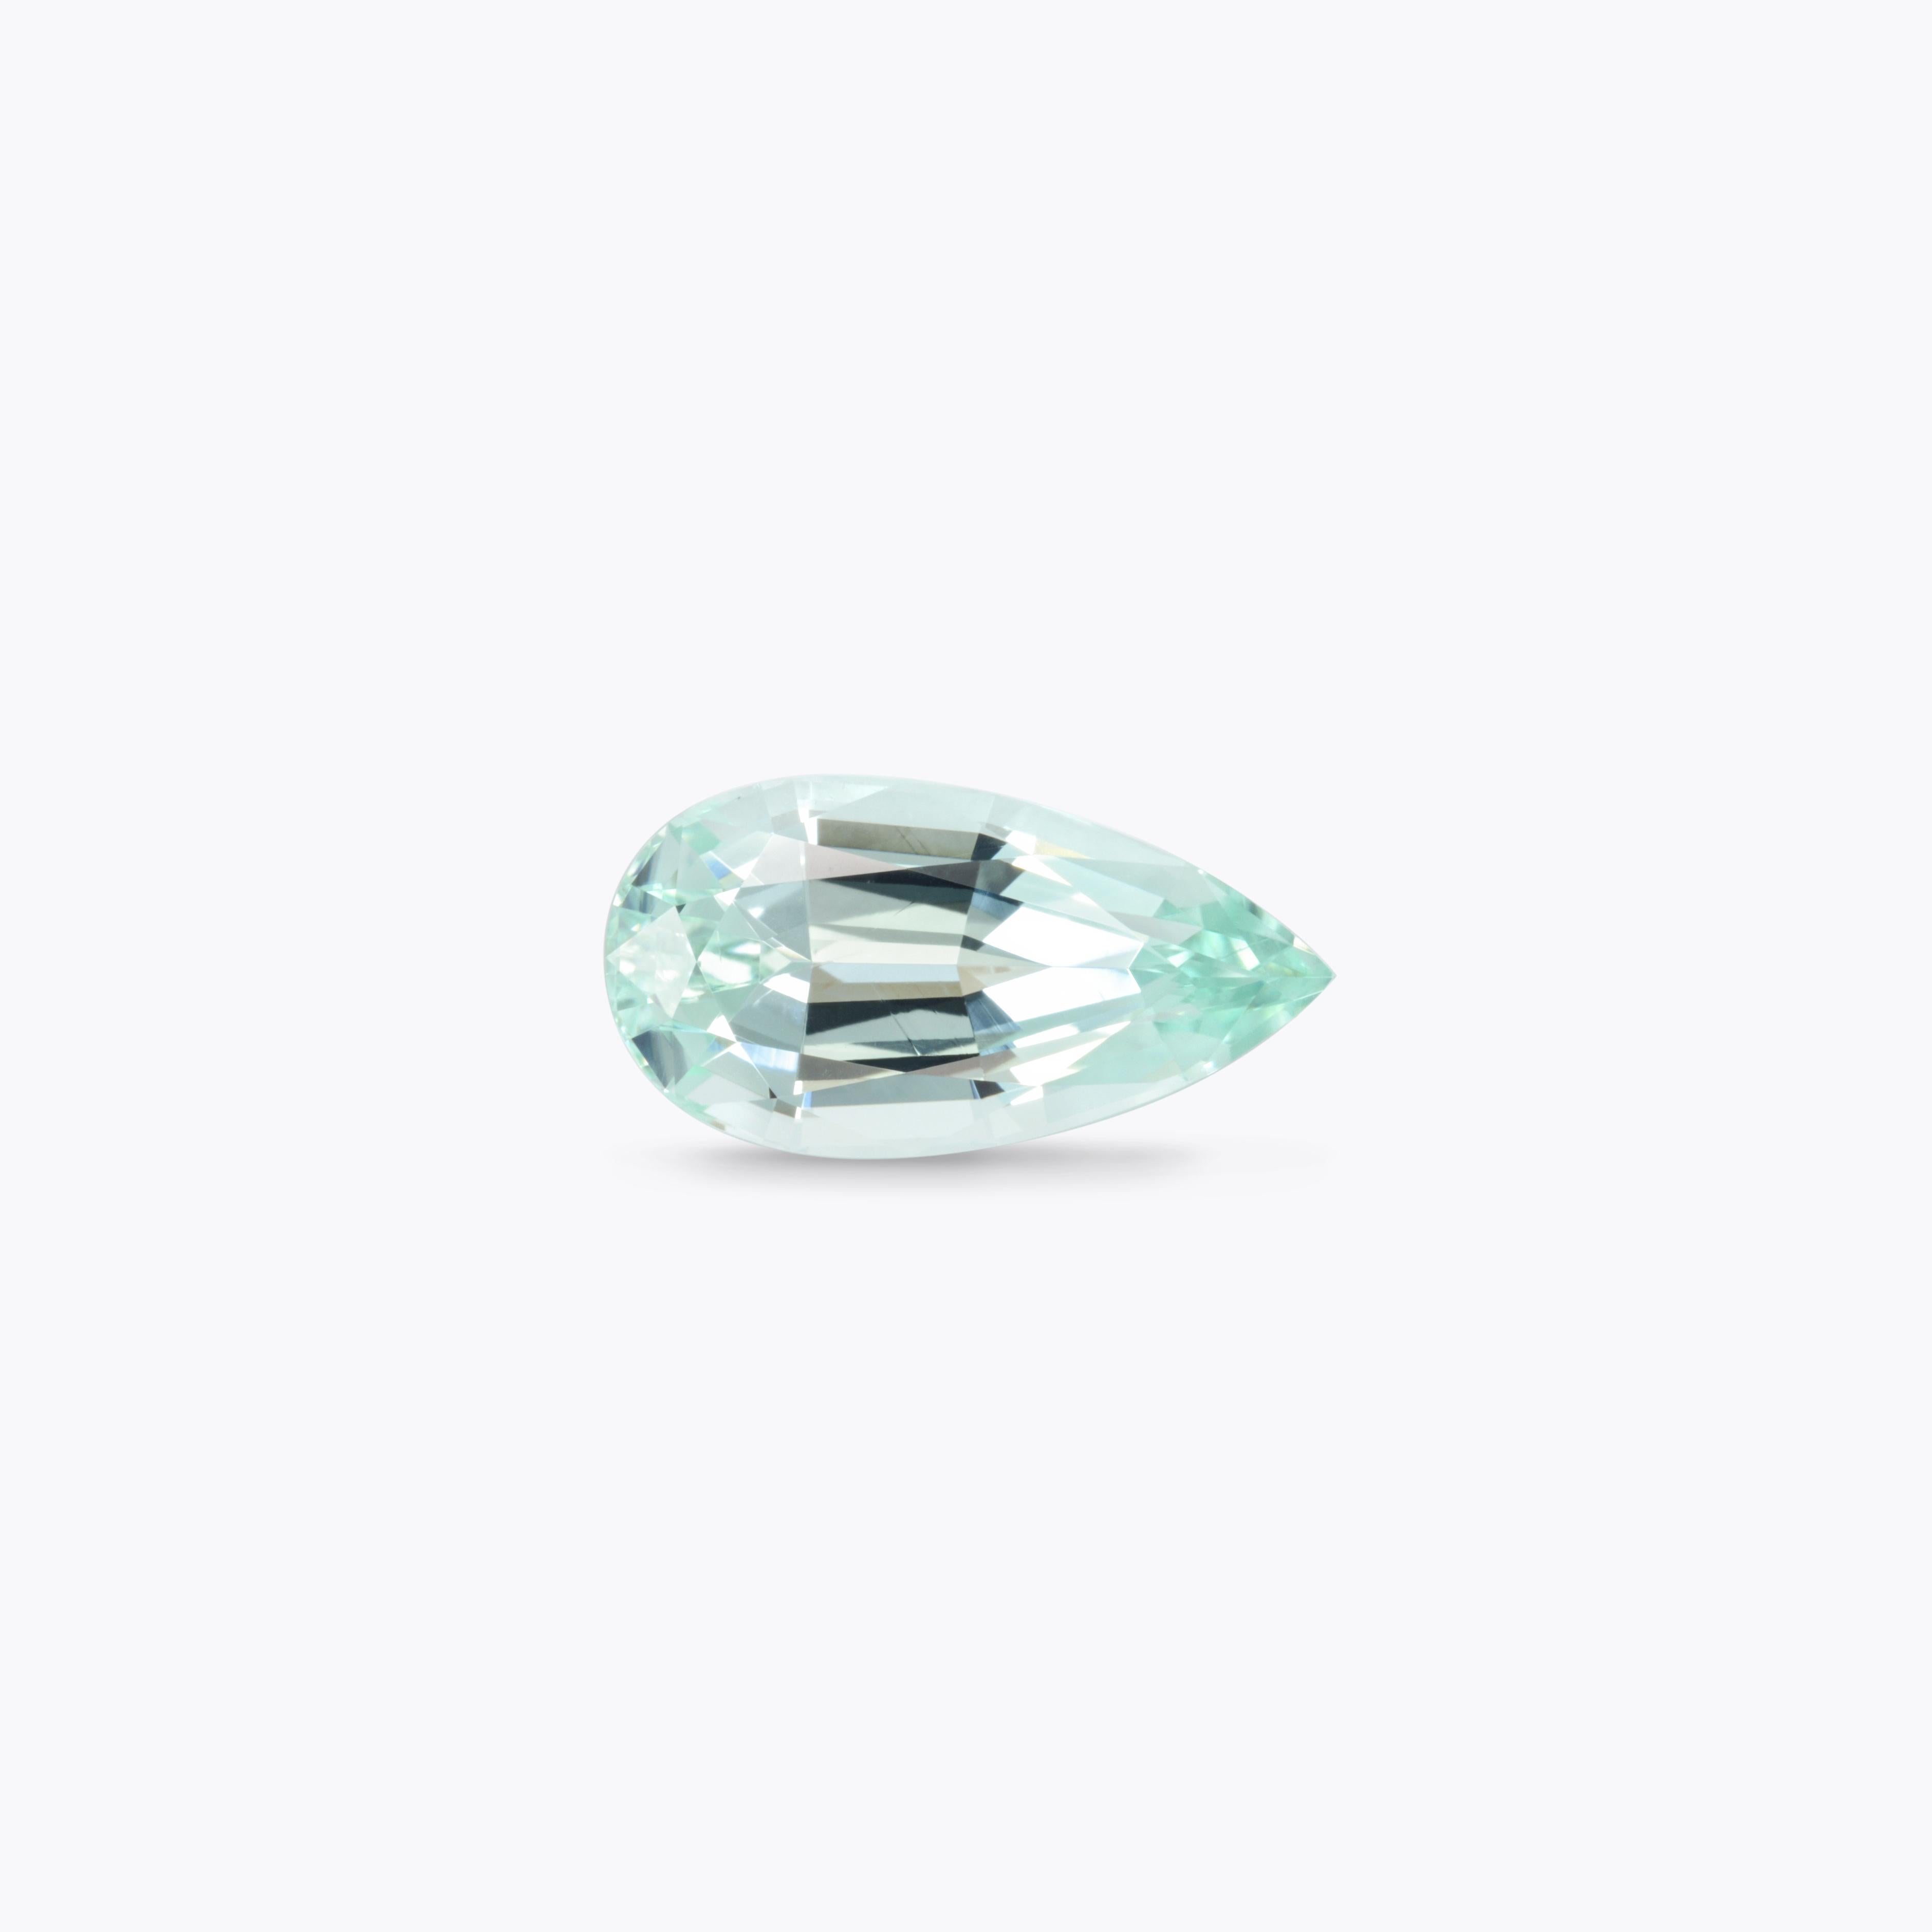 Contemporary Blue Tourmaline Ring Necklace Gem 7.39 Carat Pear Shape Loose Gemstone